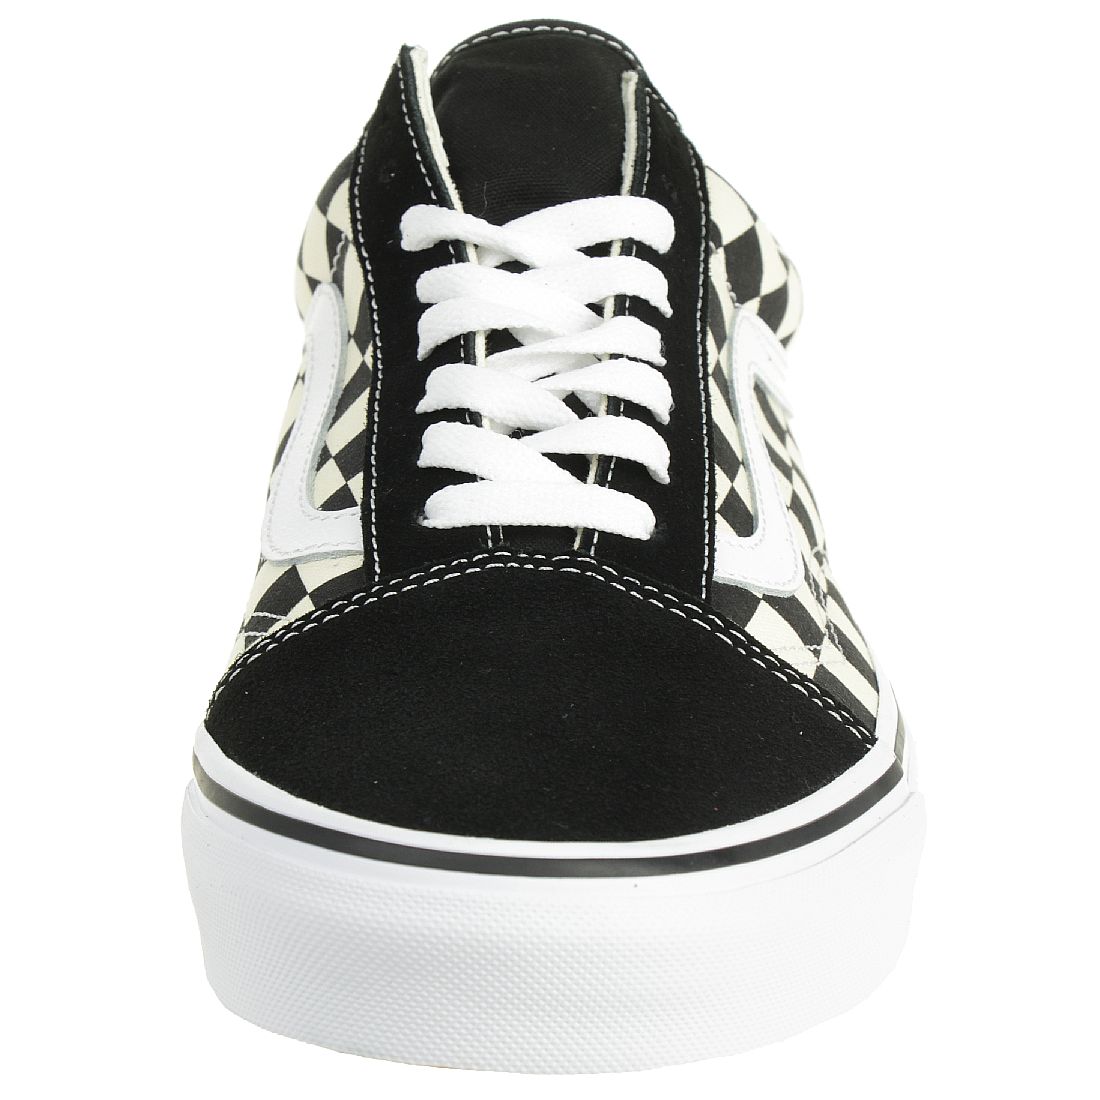 VANS Old Skool Sneaker Skate Schuhe Primary Check Canvas black/white